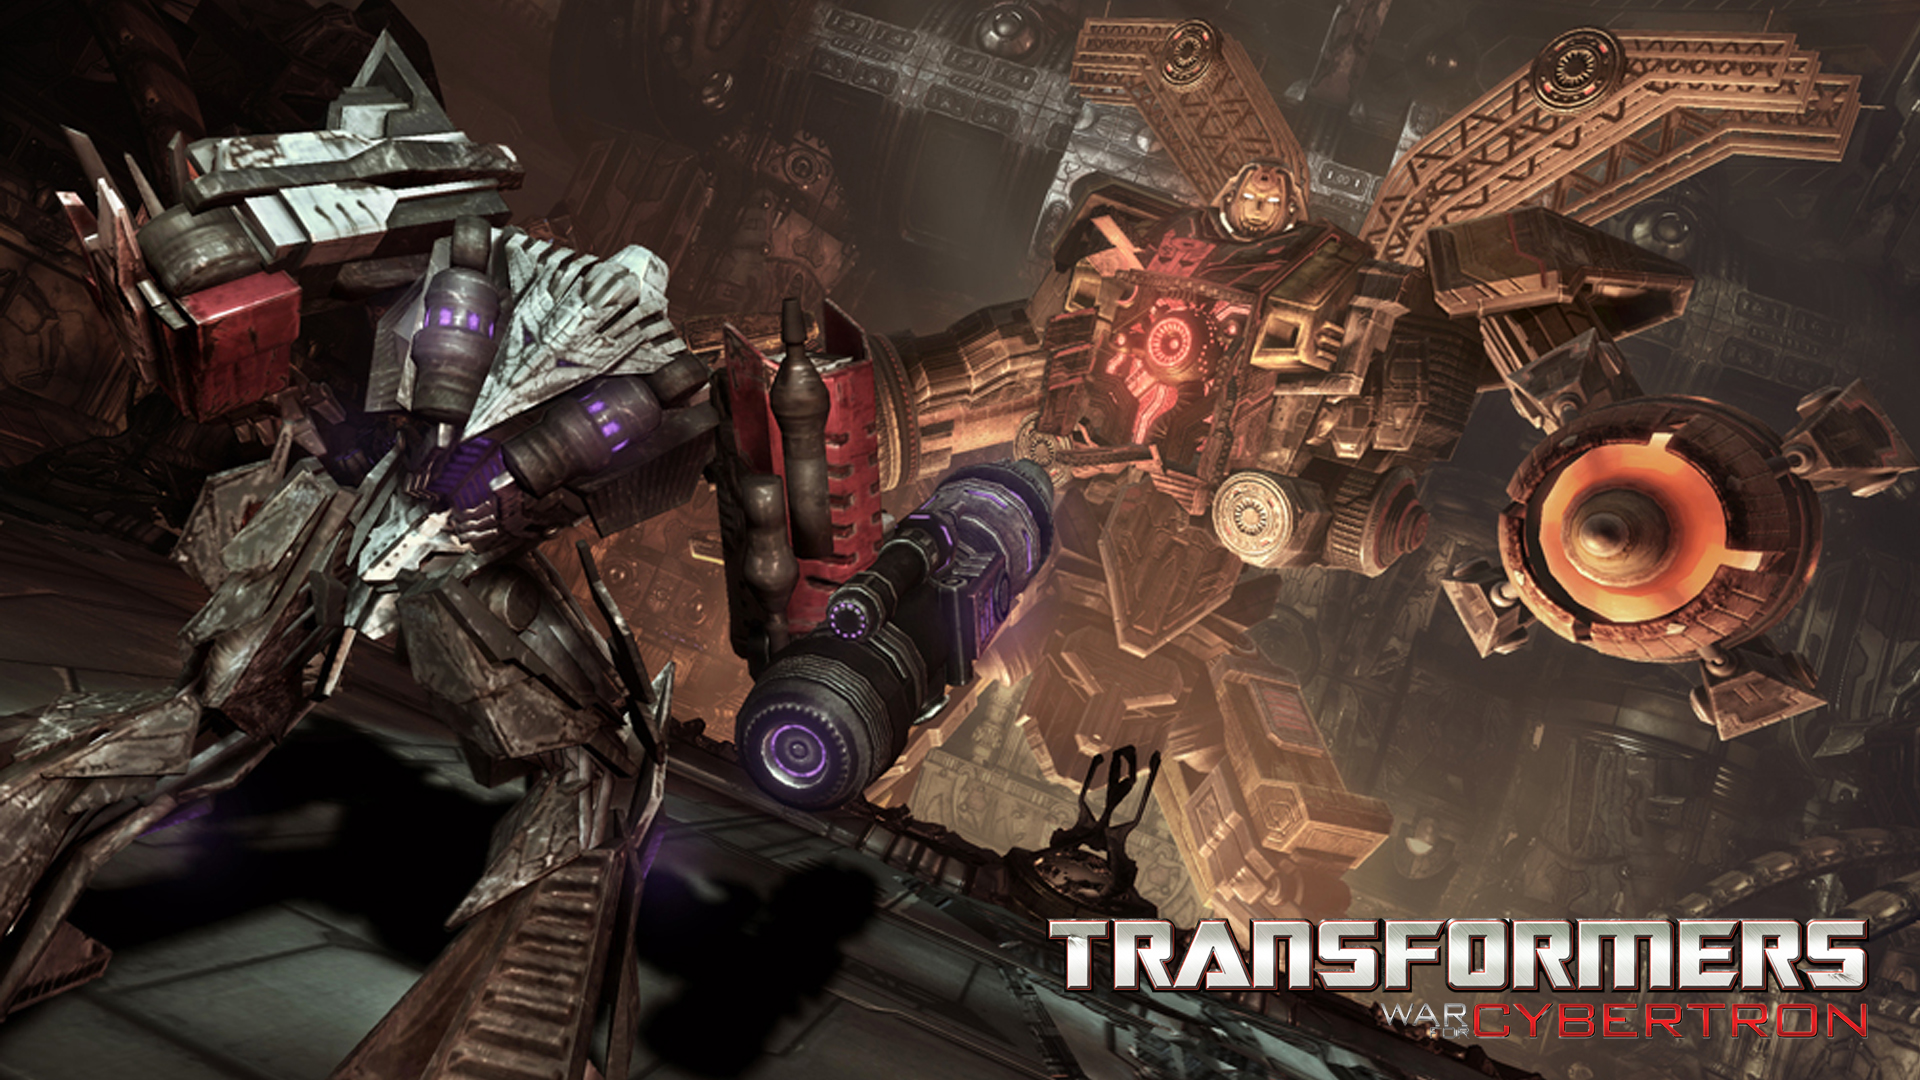 Transformers Cybertron Wallpaper HD Full Gamejetz